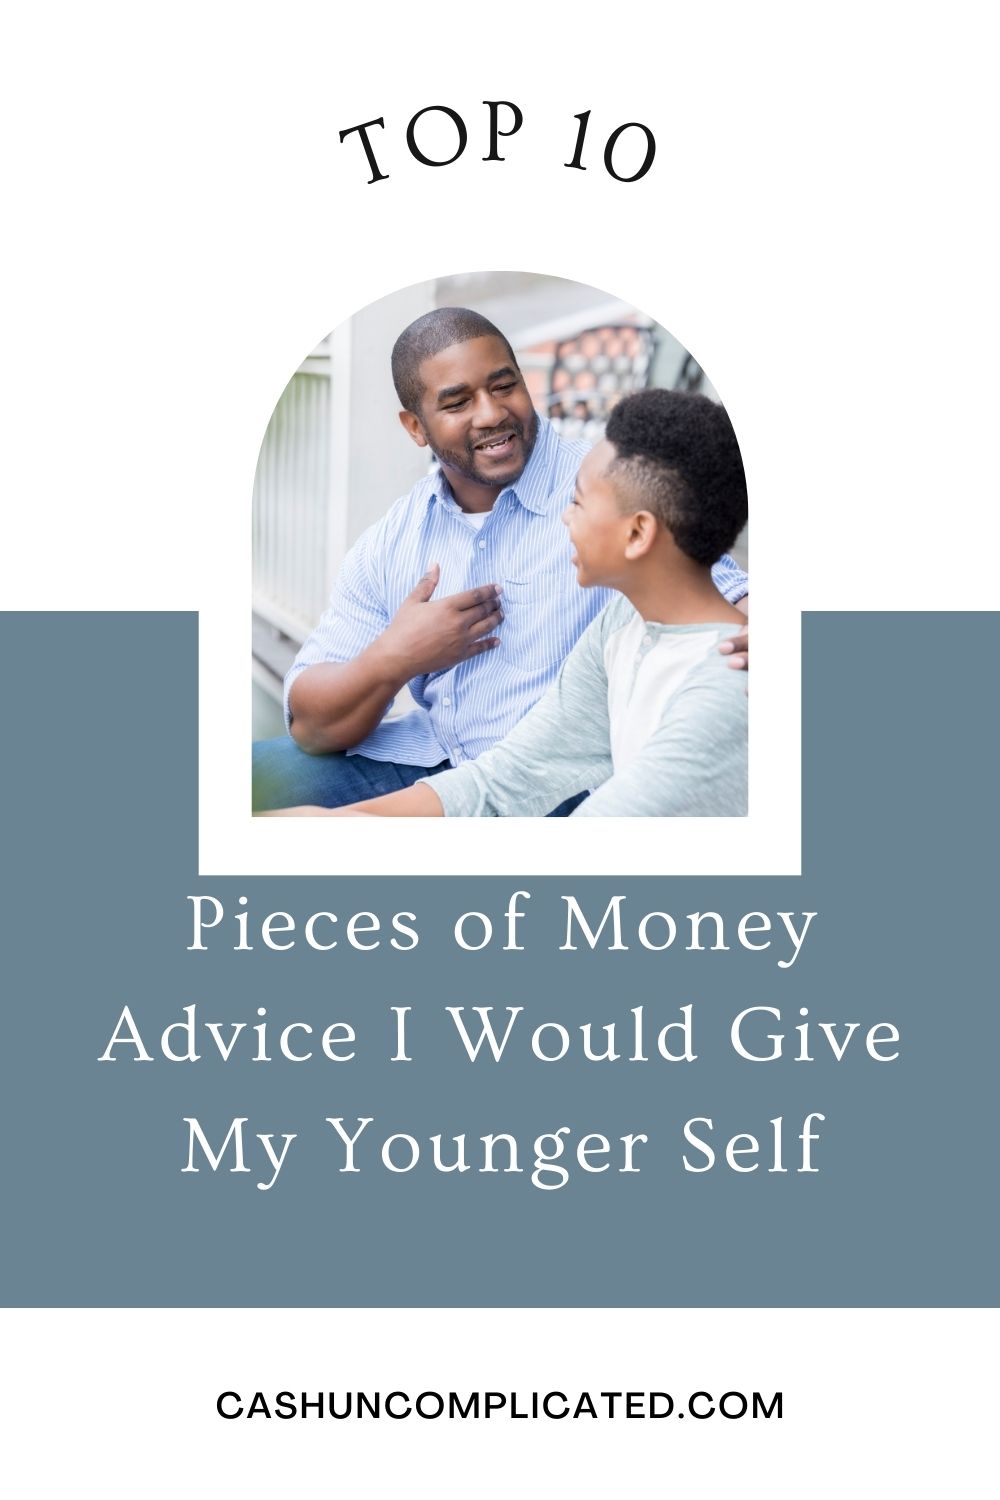 Money advice